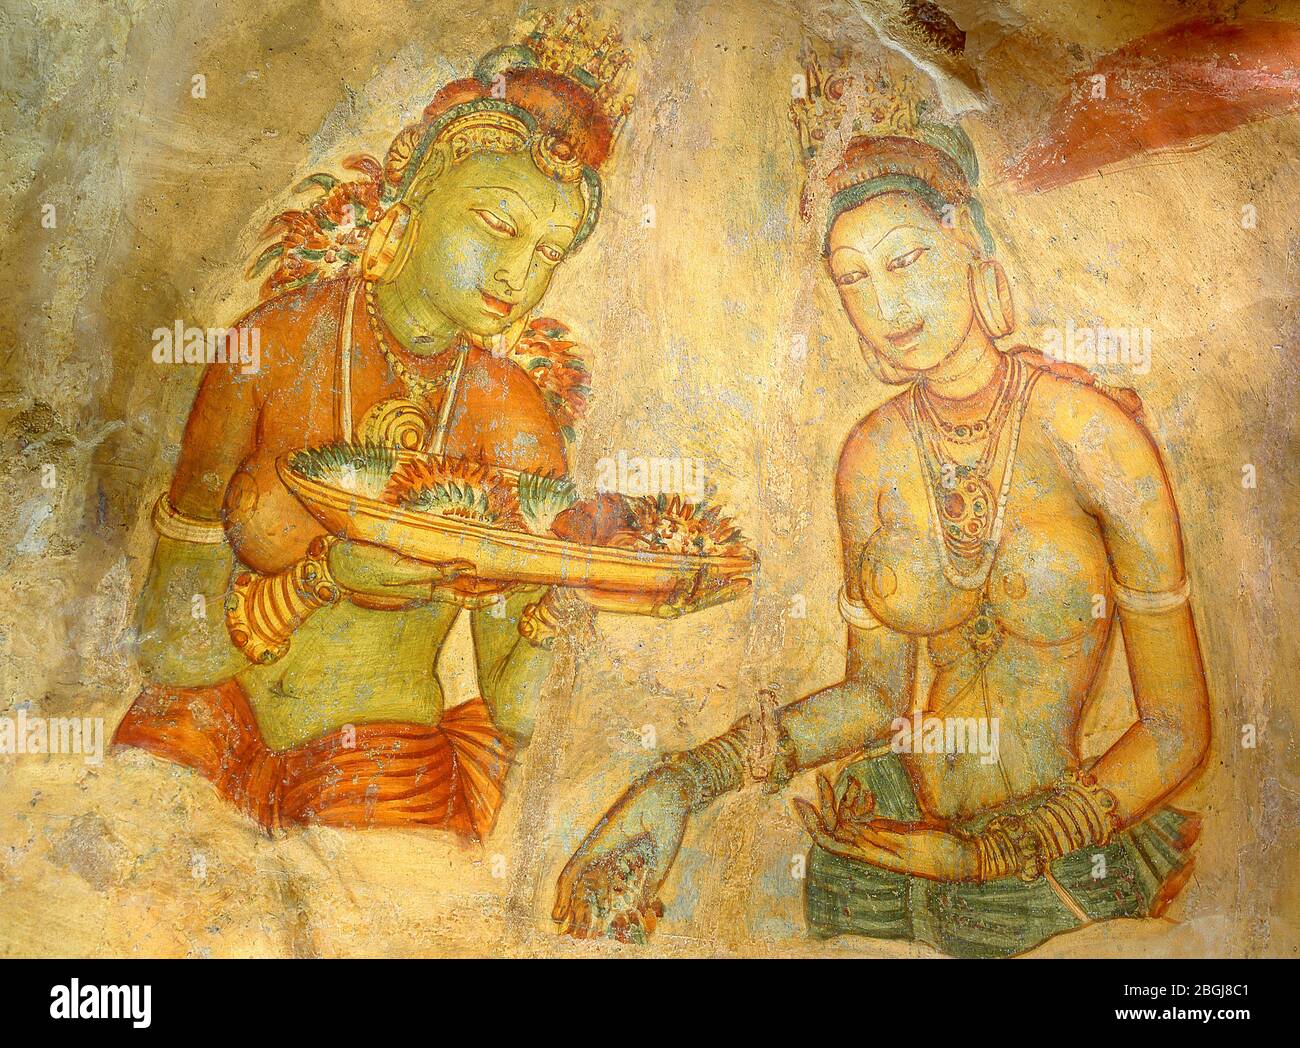 Sigiriya maidens fresco painting, Sigiriya (Sinhagiri), Matale District, Southern Province, Sri Lanka Stock Photo